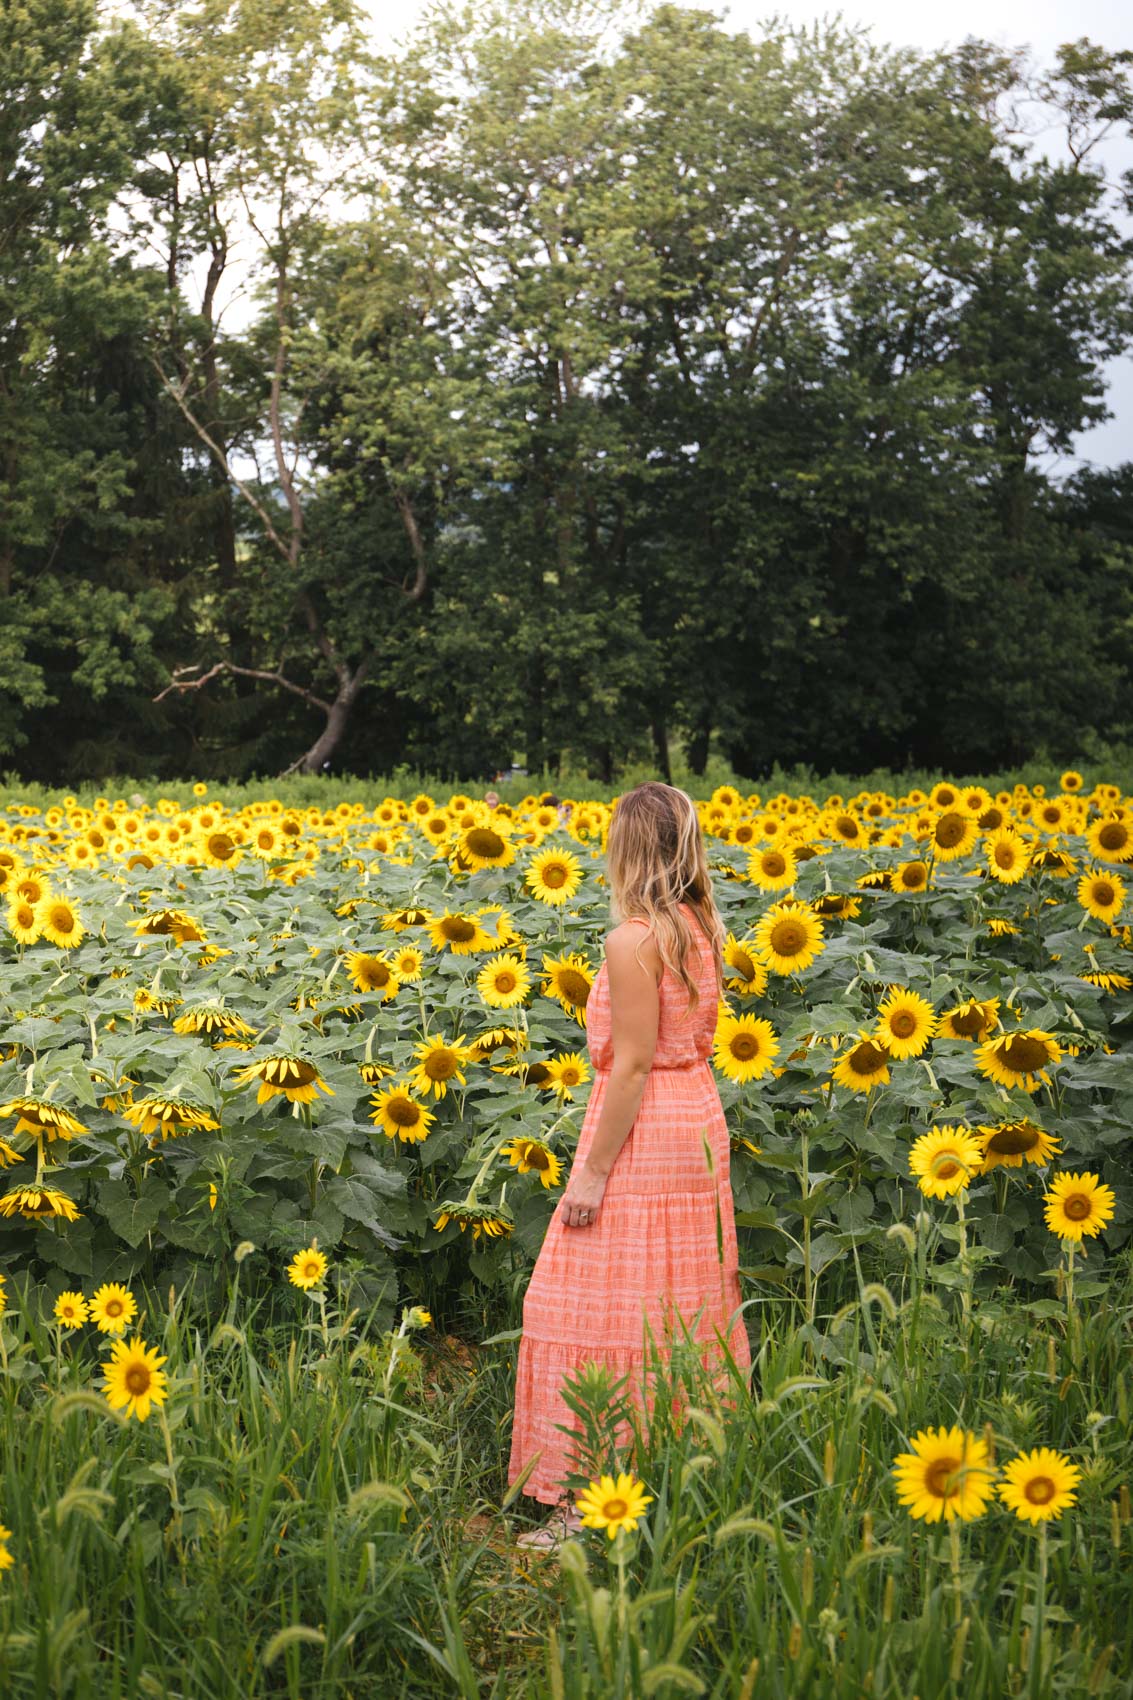 casual maxi dress outfit for sunflower field pictures | sunflower field photography ideas #flowerfield #flowfieldphotoideas